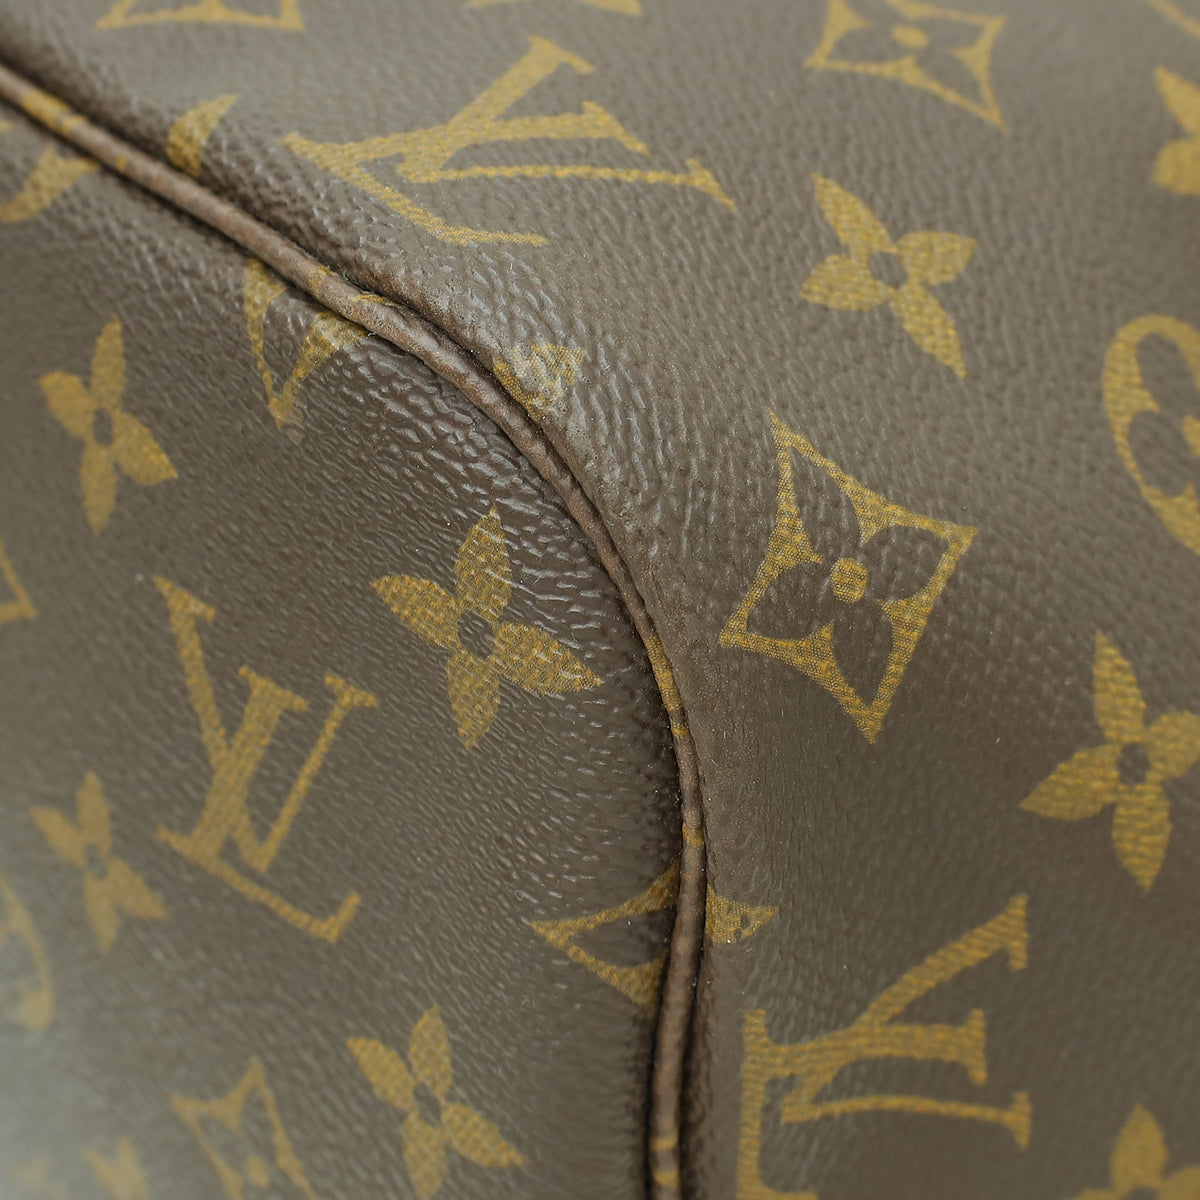 Louis Vuitton Monogram Neverfull MM Bag